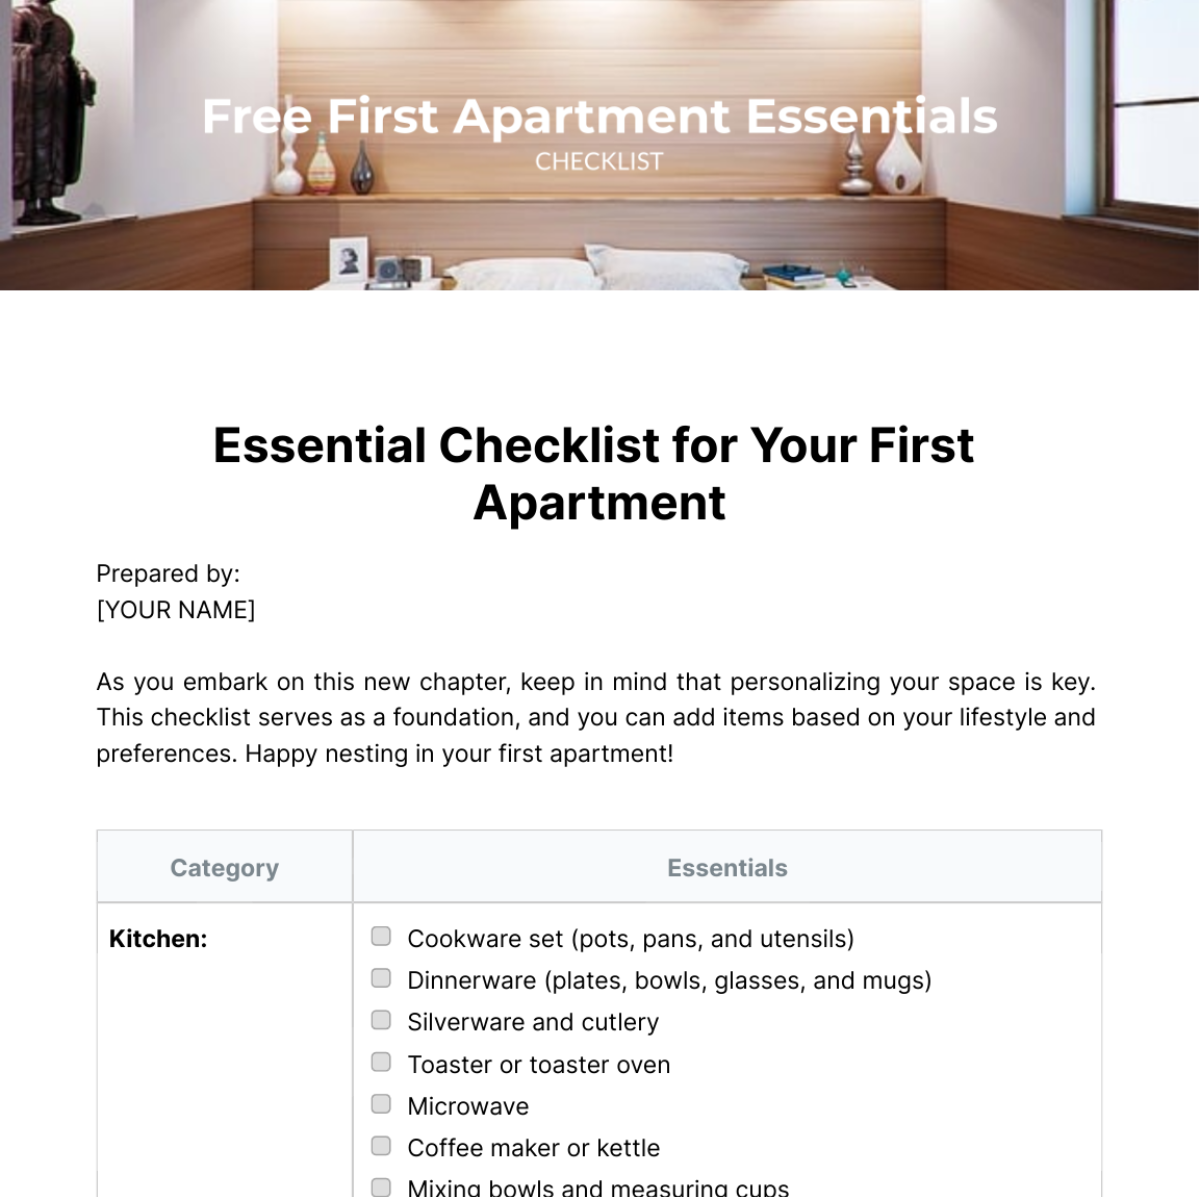 Free First Apartment Essentials Checklist Template